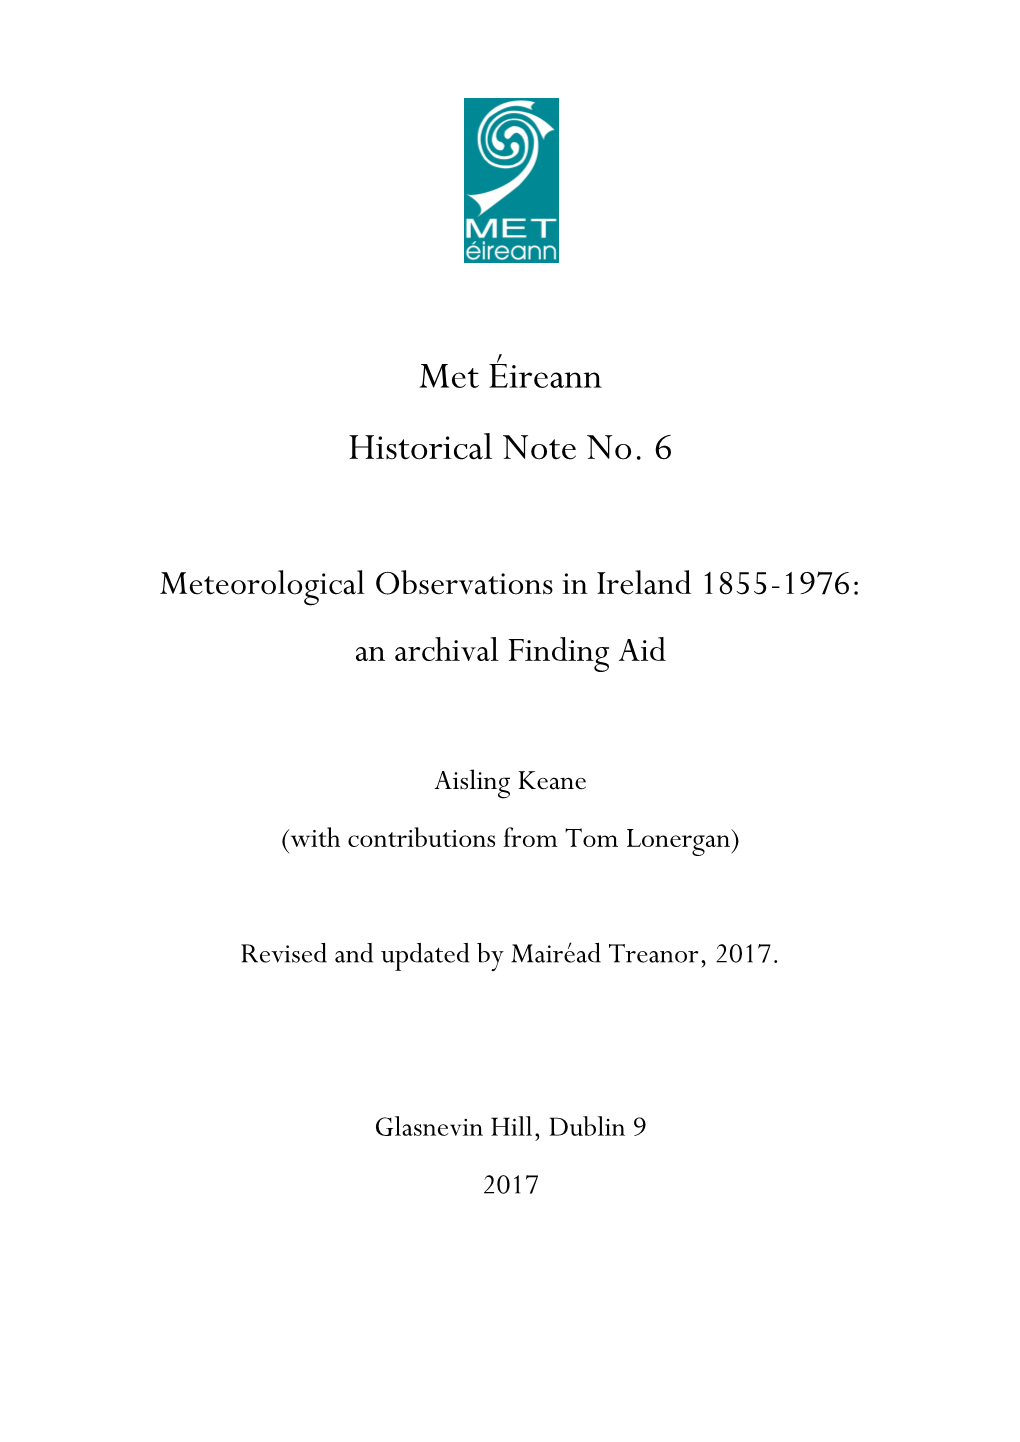 Met Éireann Historical Note No. 6